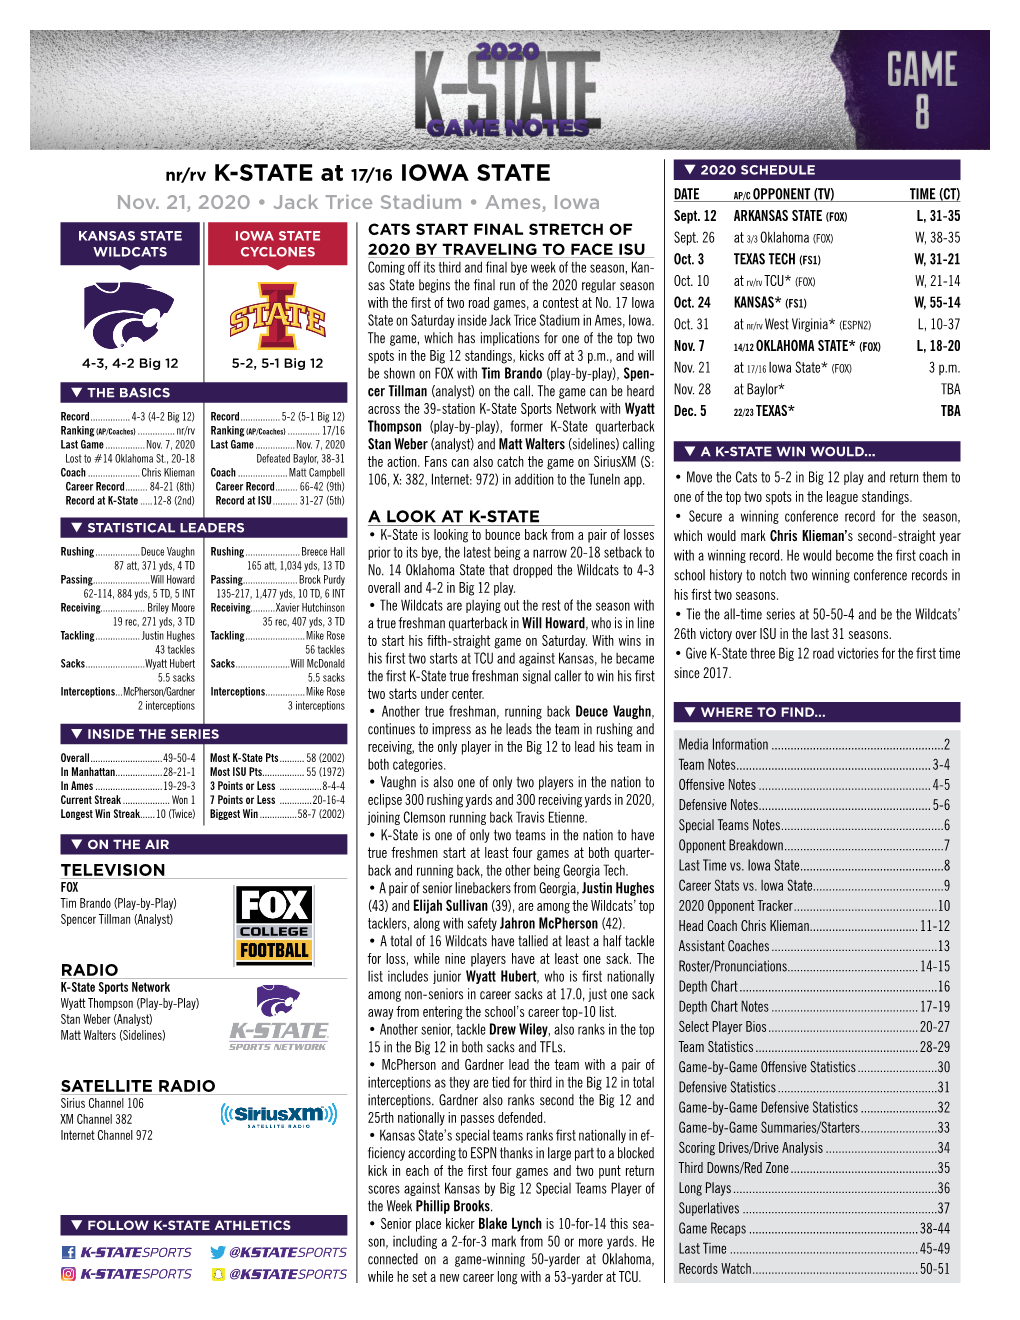 Game 8 • Iowa State